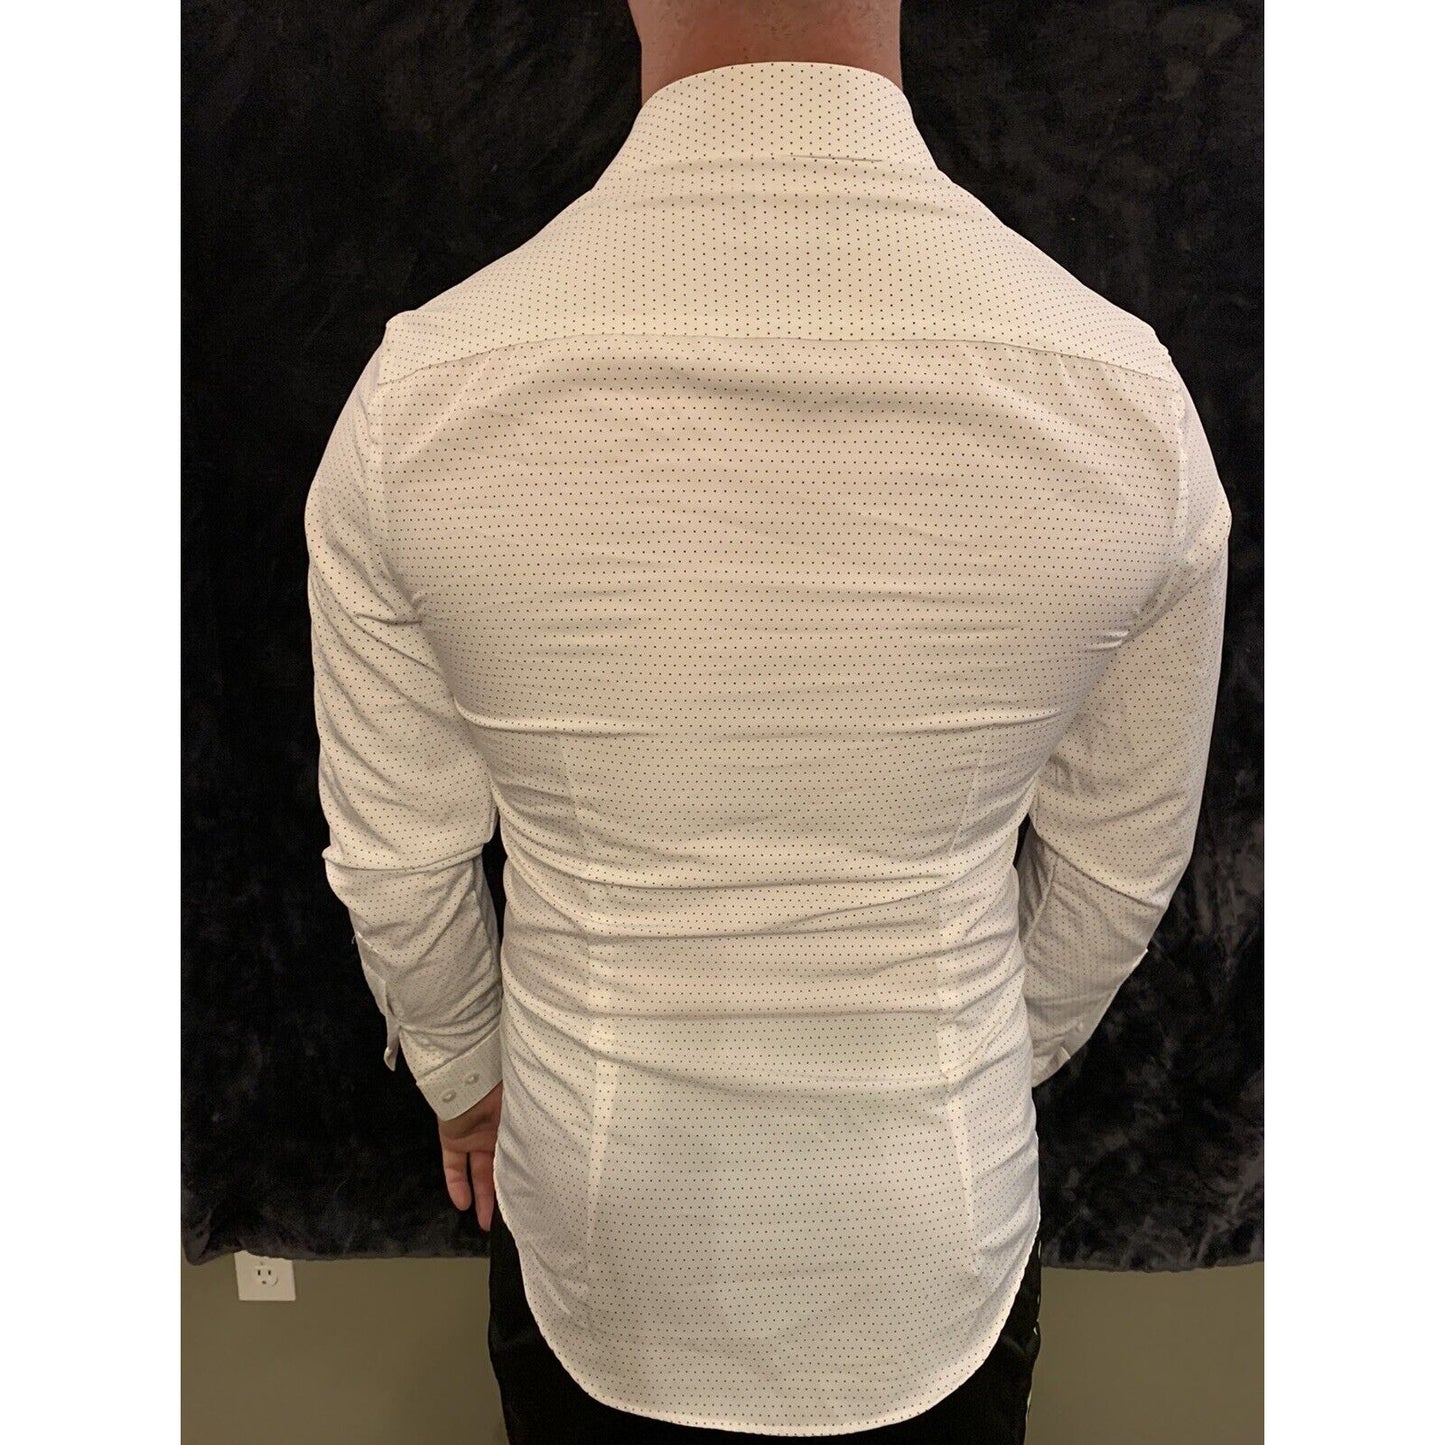 Van Huesen Traveler men’s slim fit SPECKED button down shirt 14-14.5 X 32/33